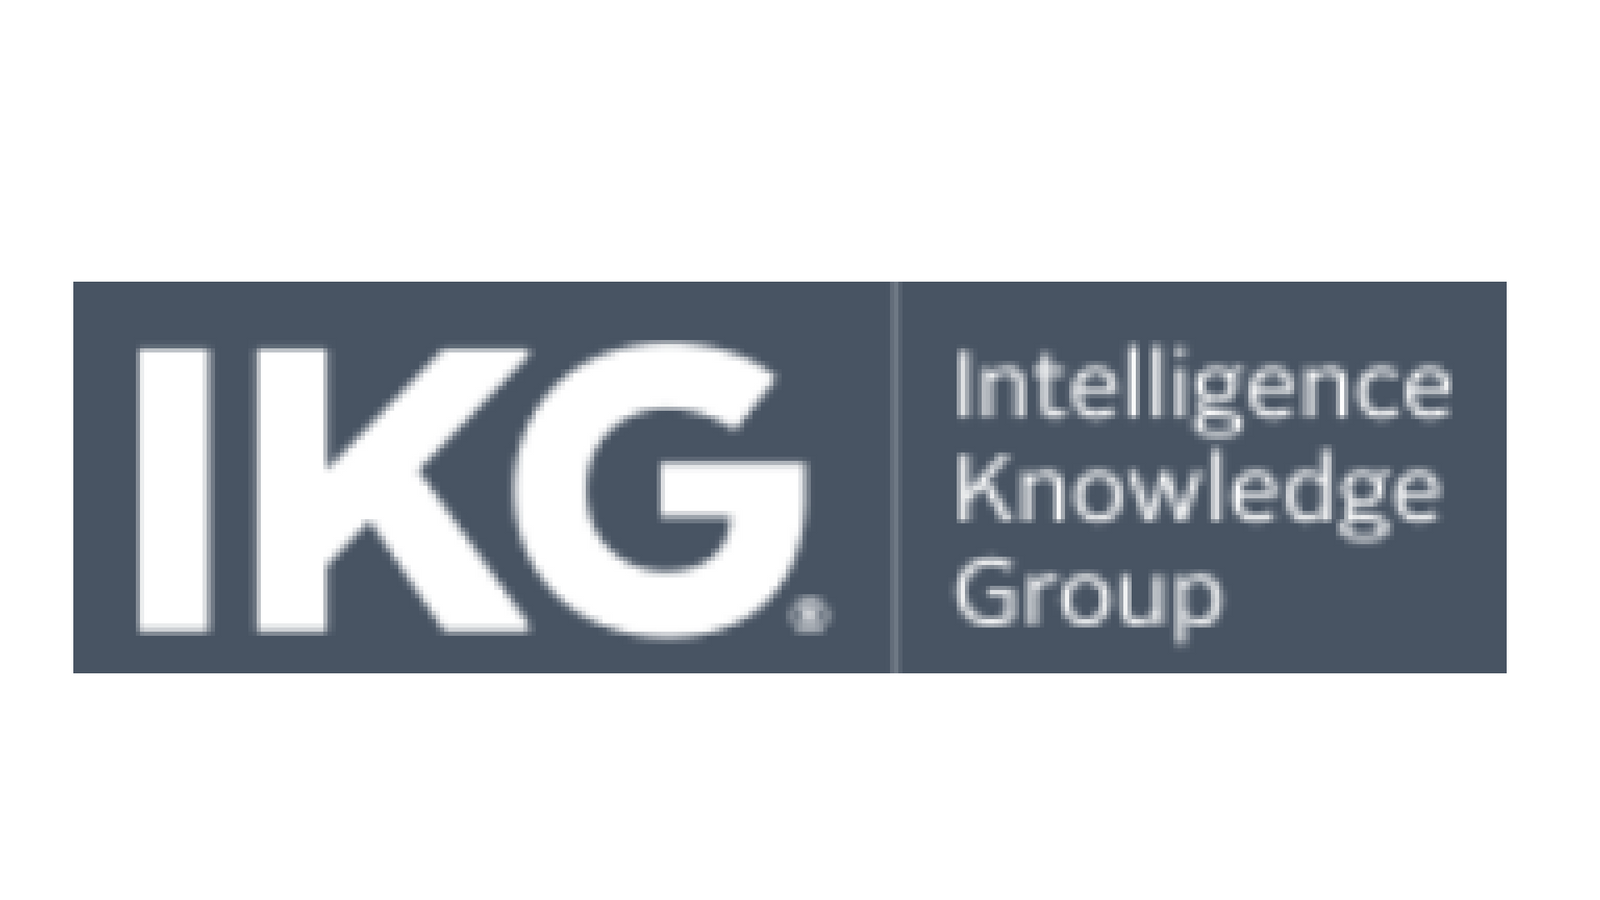 Intelligence Knowledge Group (IKG)